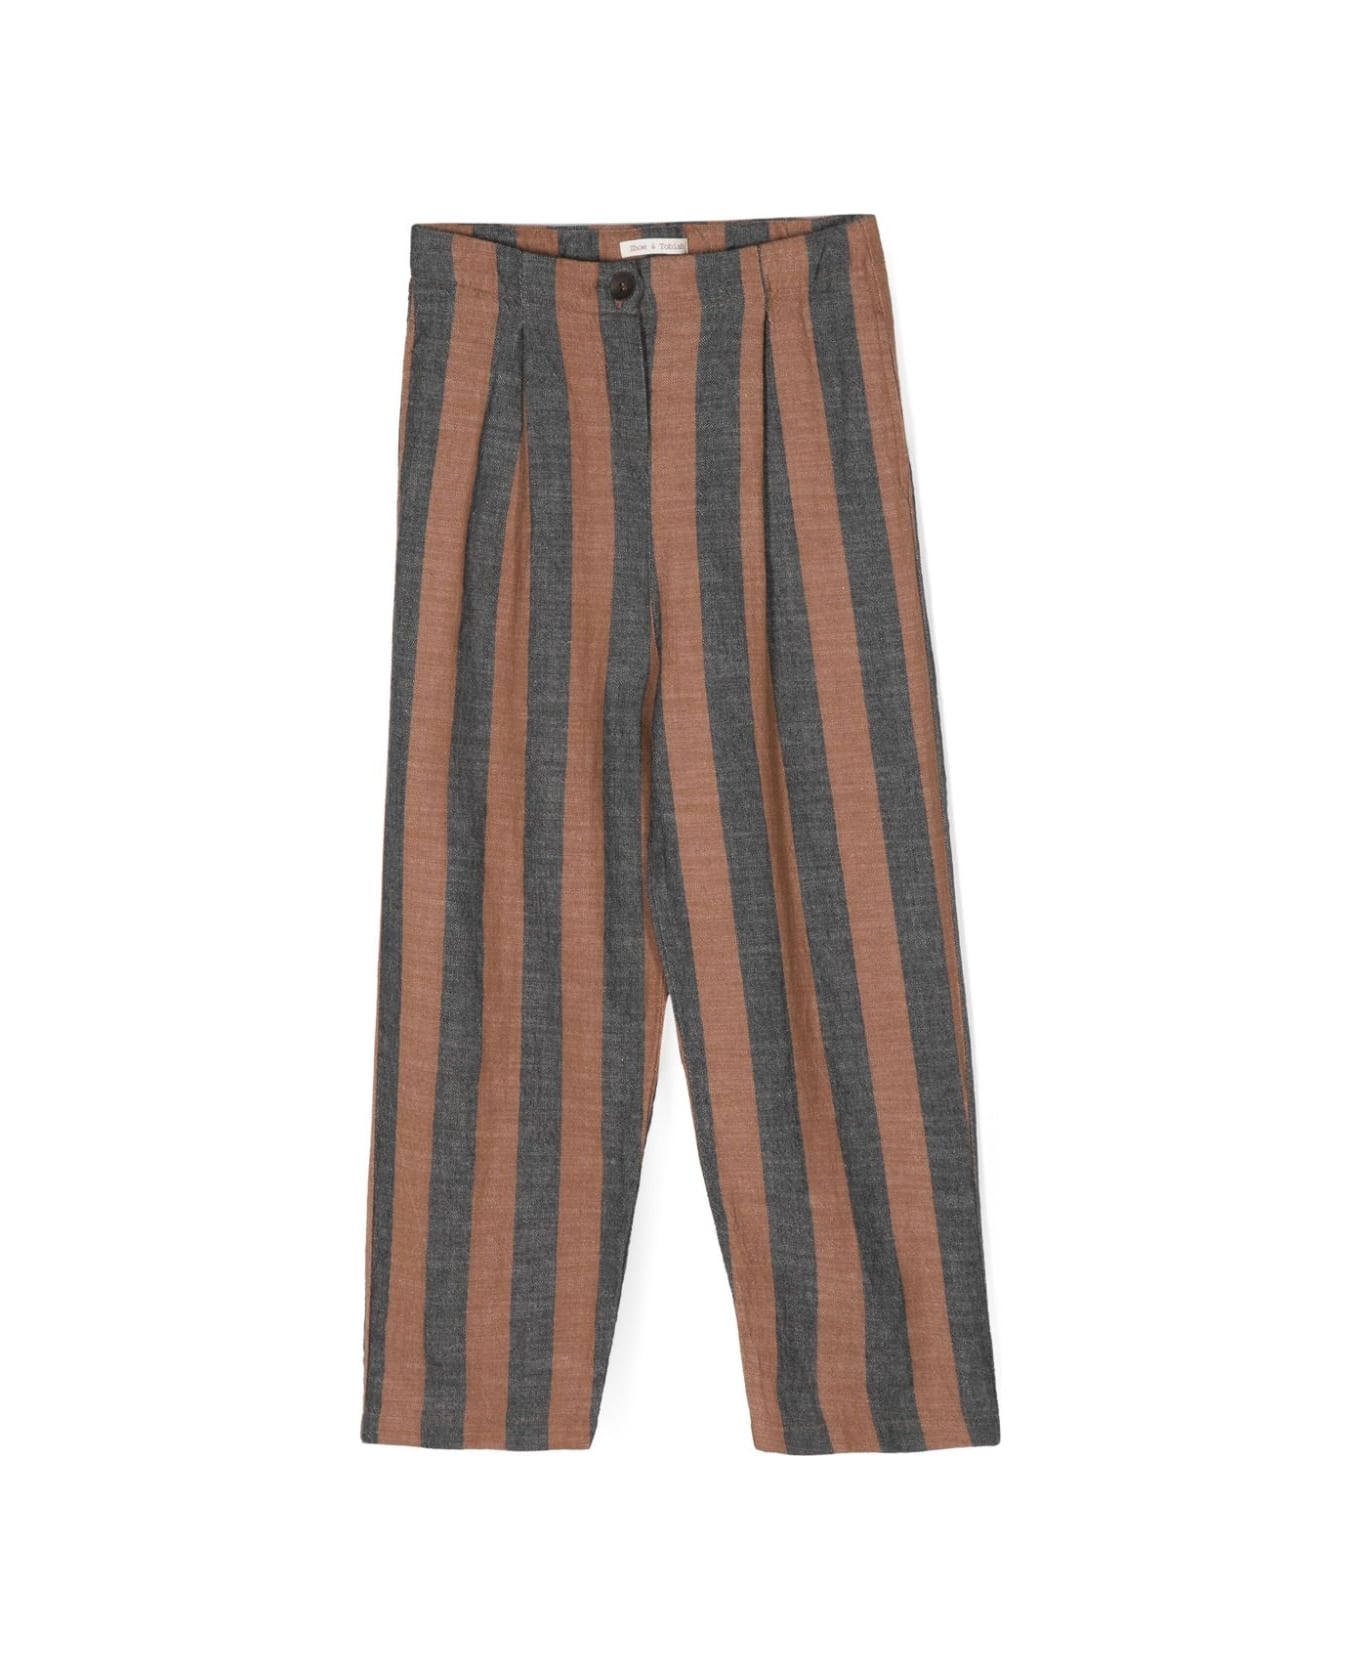 Zhoe & Tobiah Striped Trousers - Gray